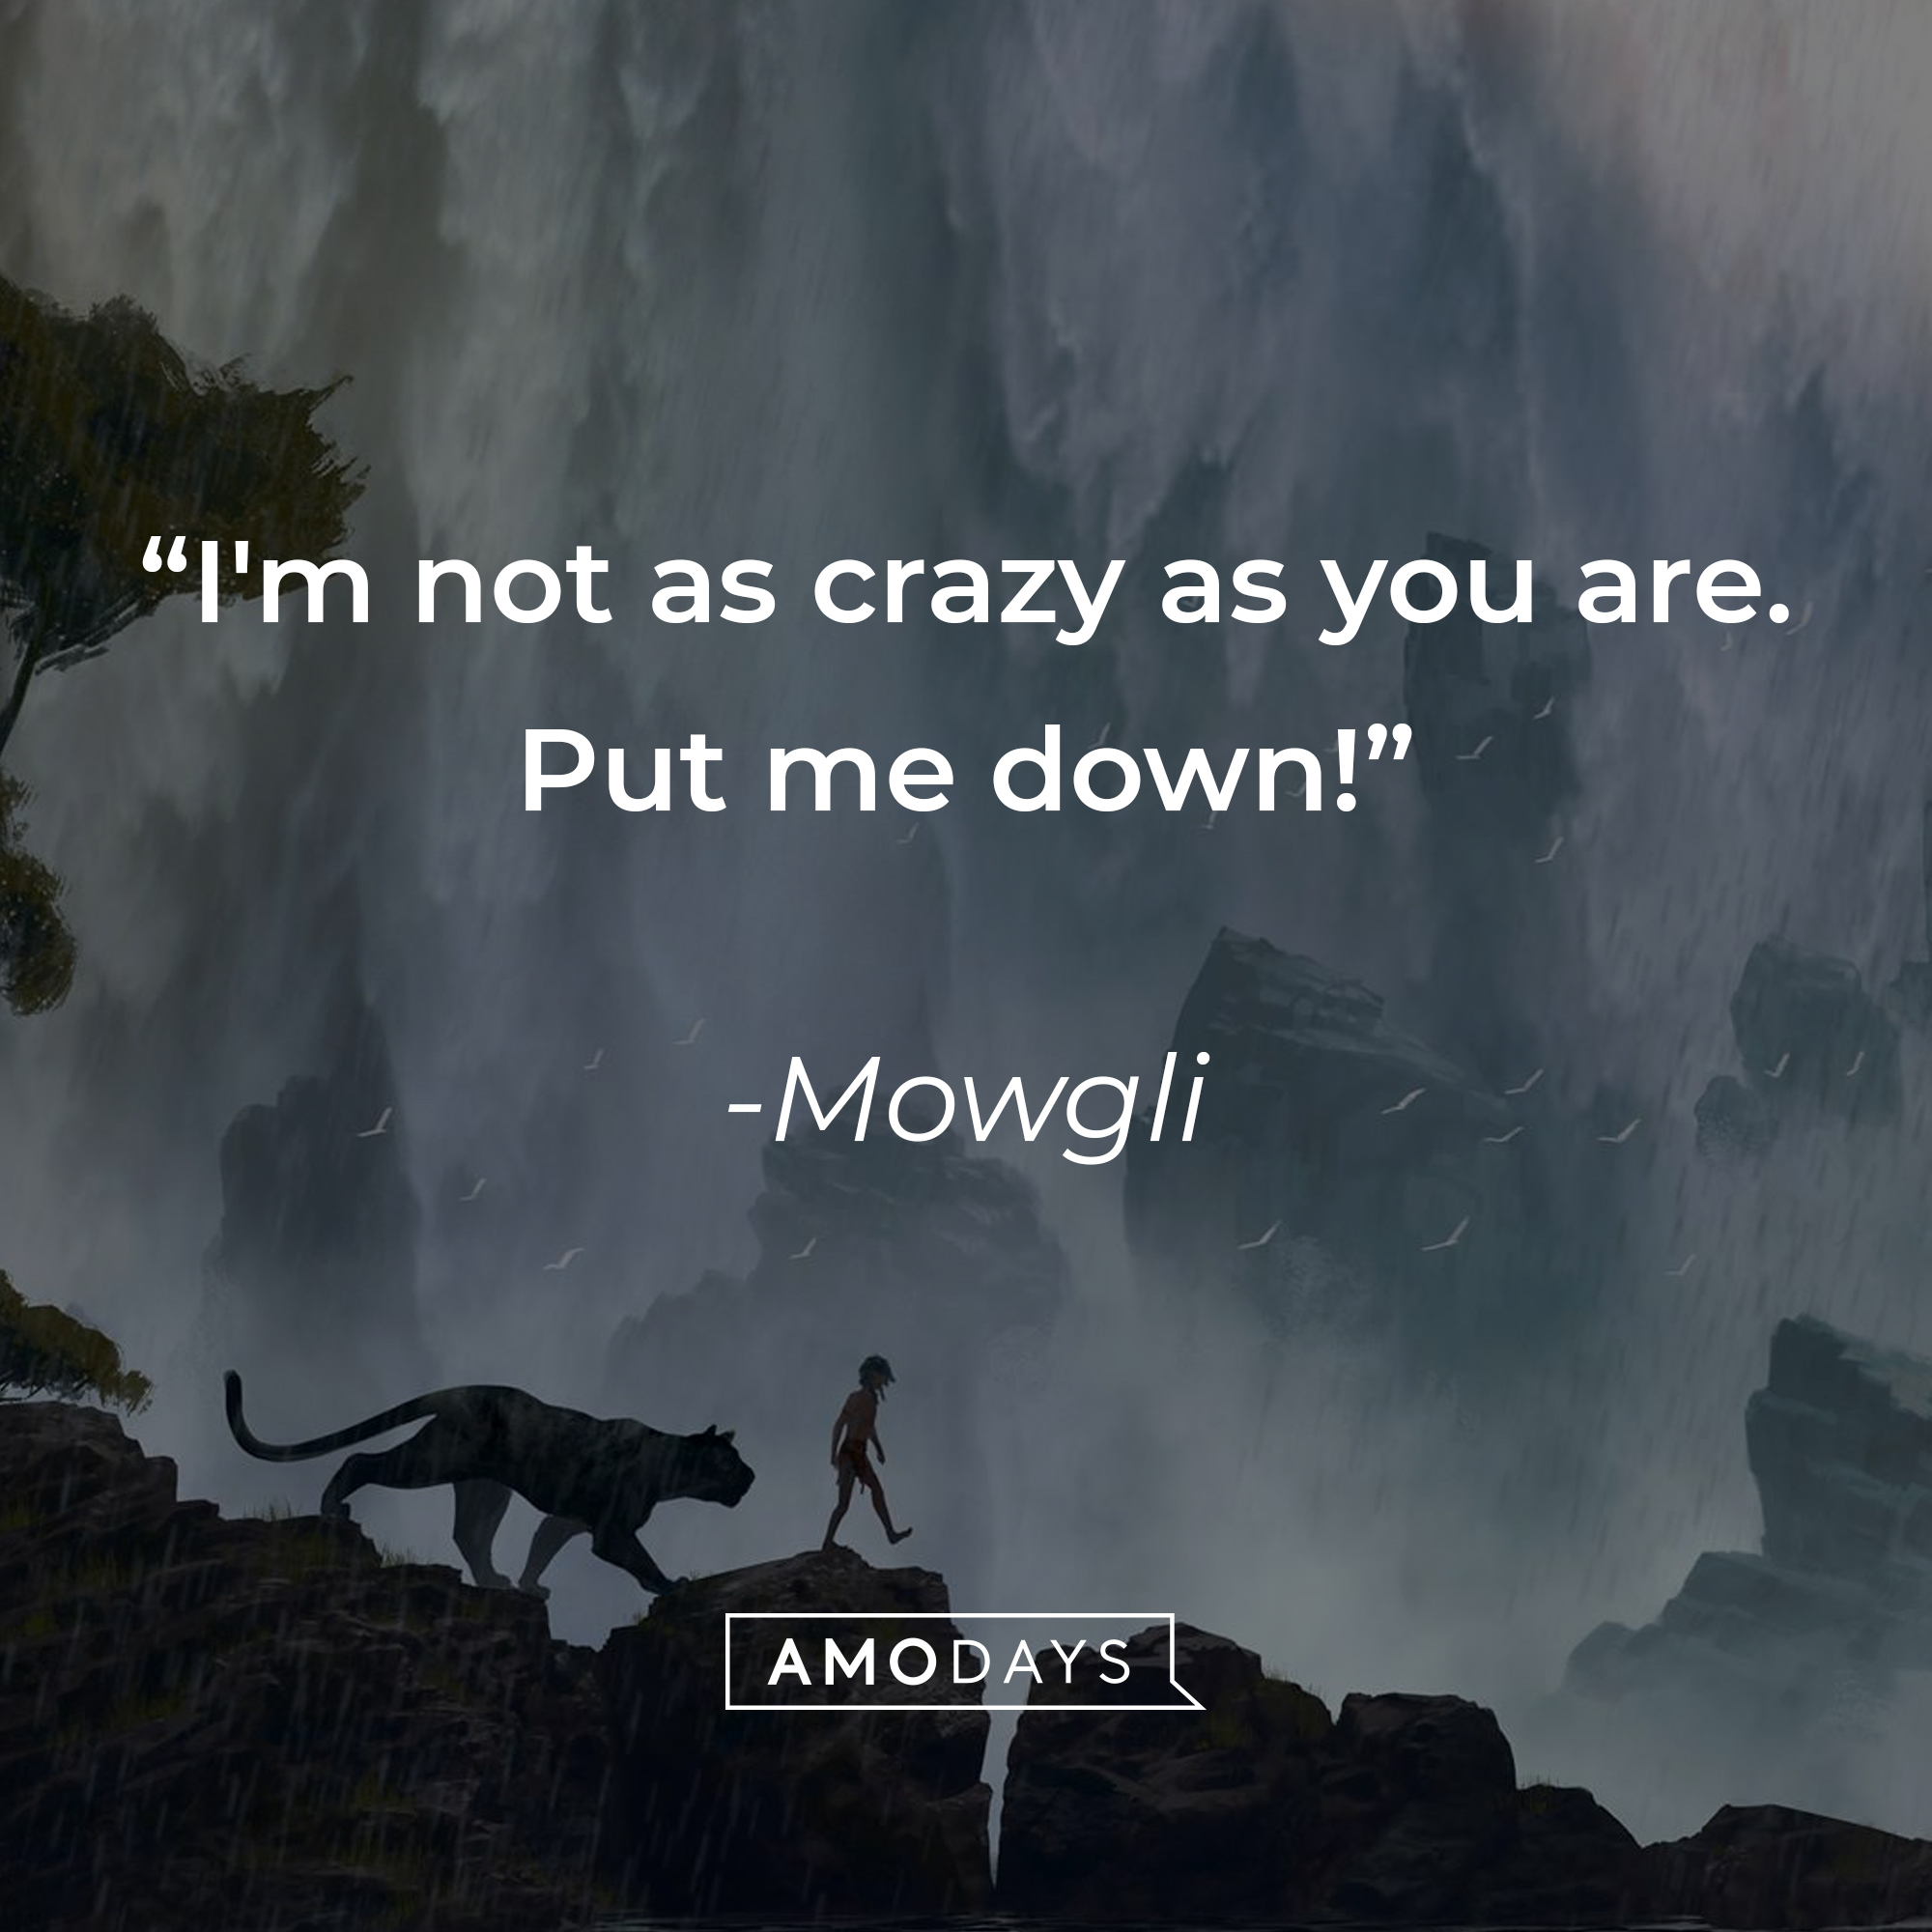 Mowgli's quote: "I'm not as crazy as you are. Put me down!" | Source: facebook.com/DisneyJungleBook